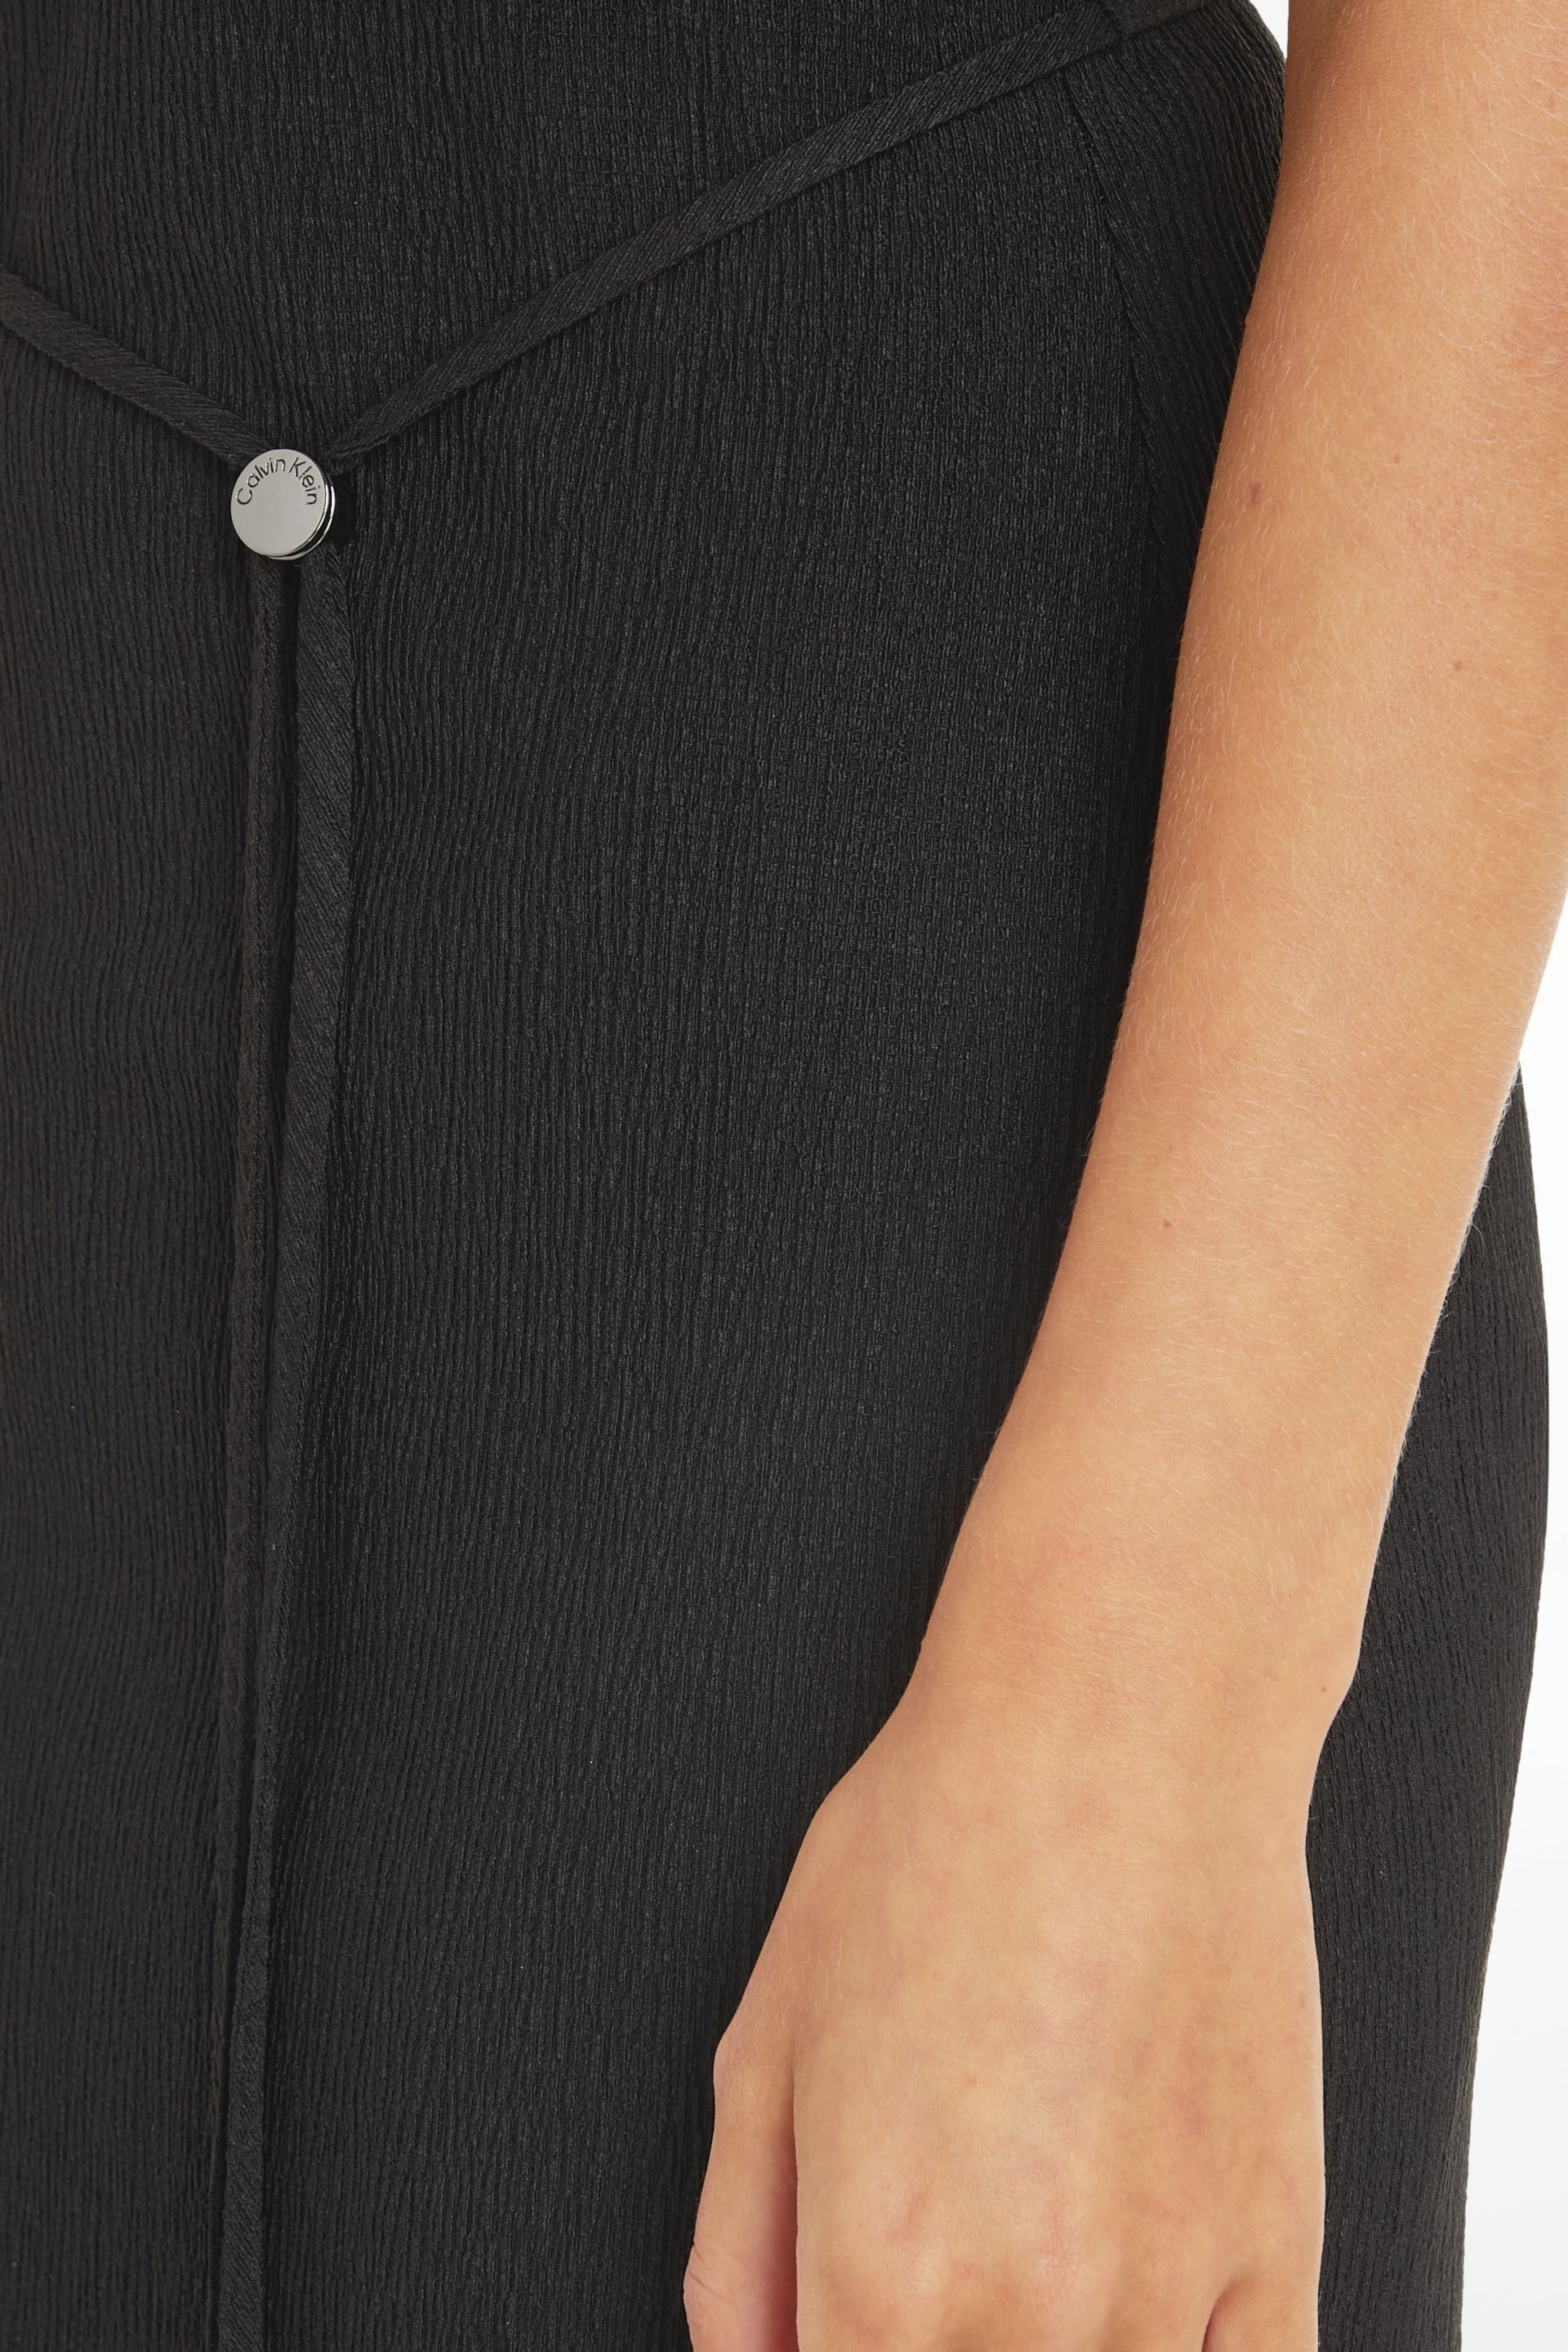 Calvin Klein Black Maxi Shift Dress - Image 3 of 4